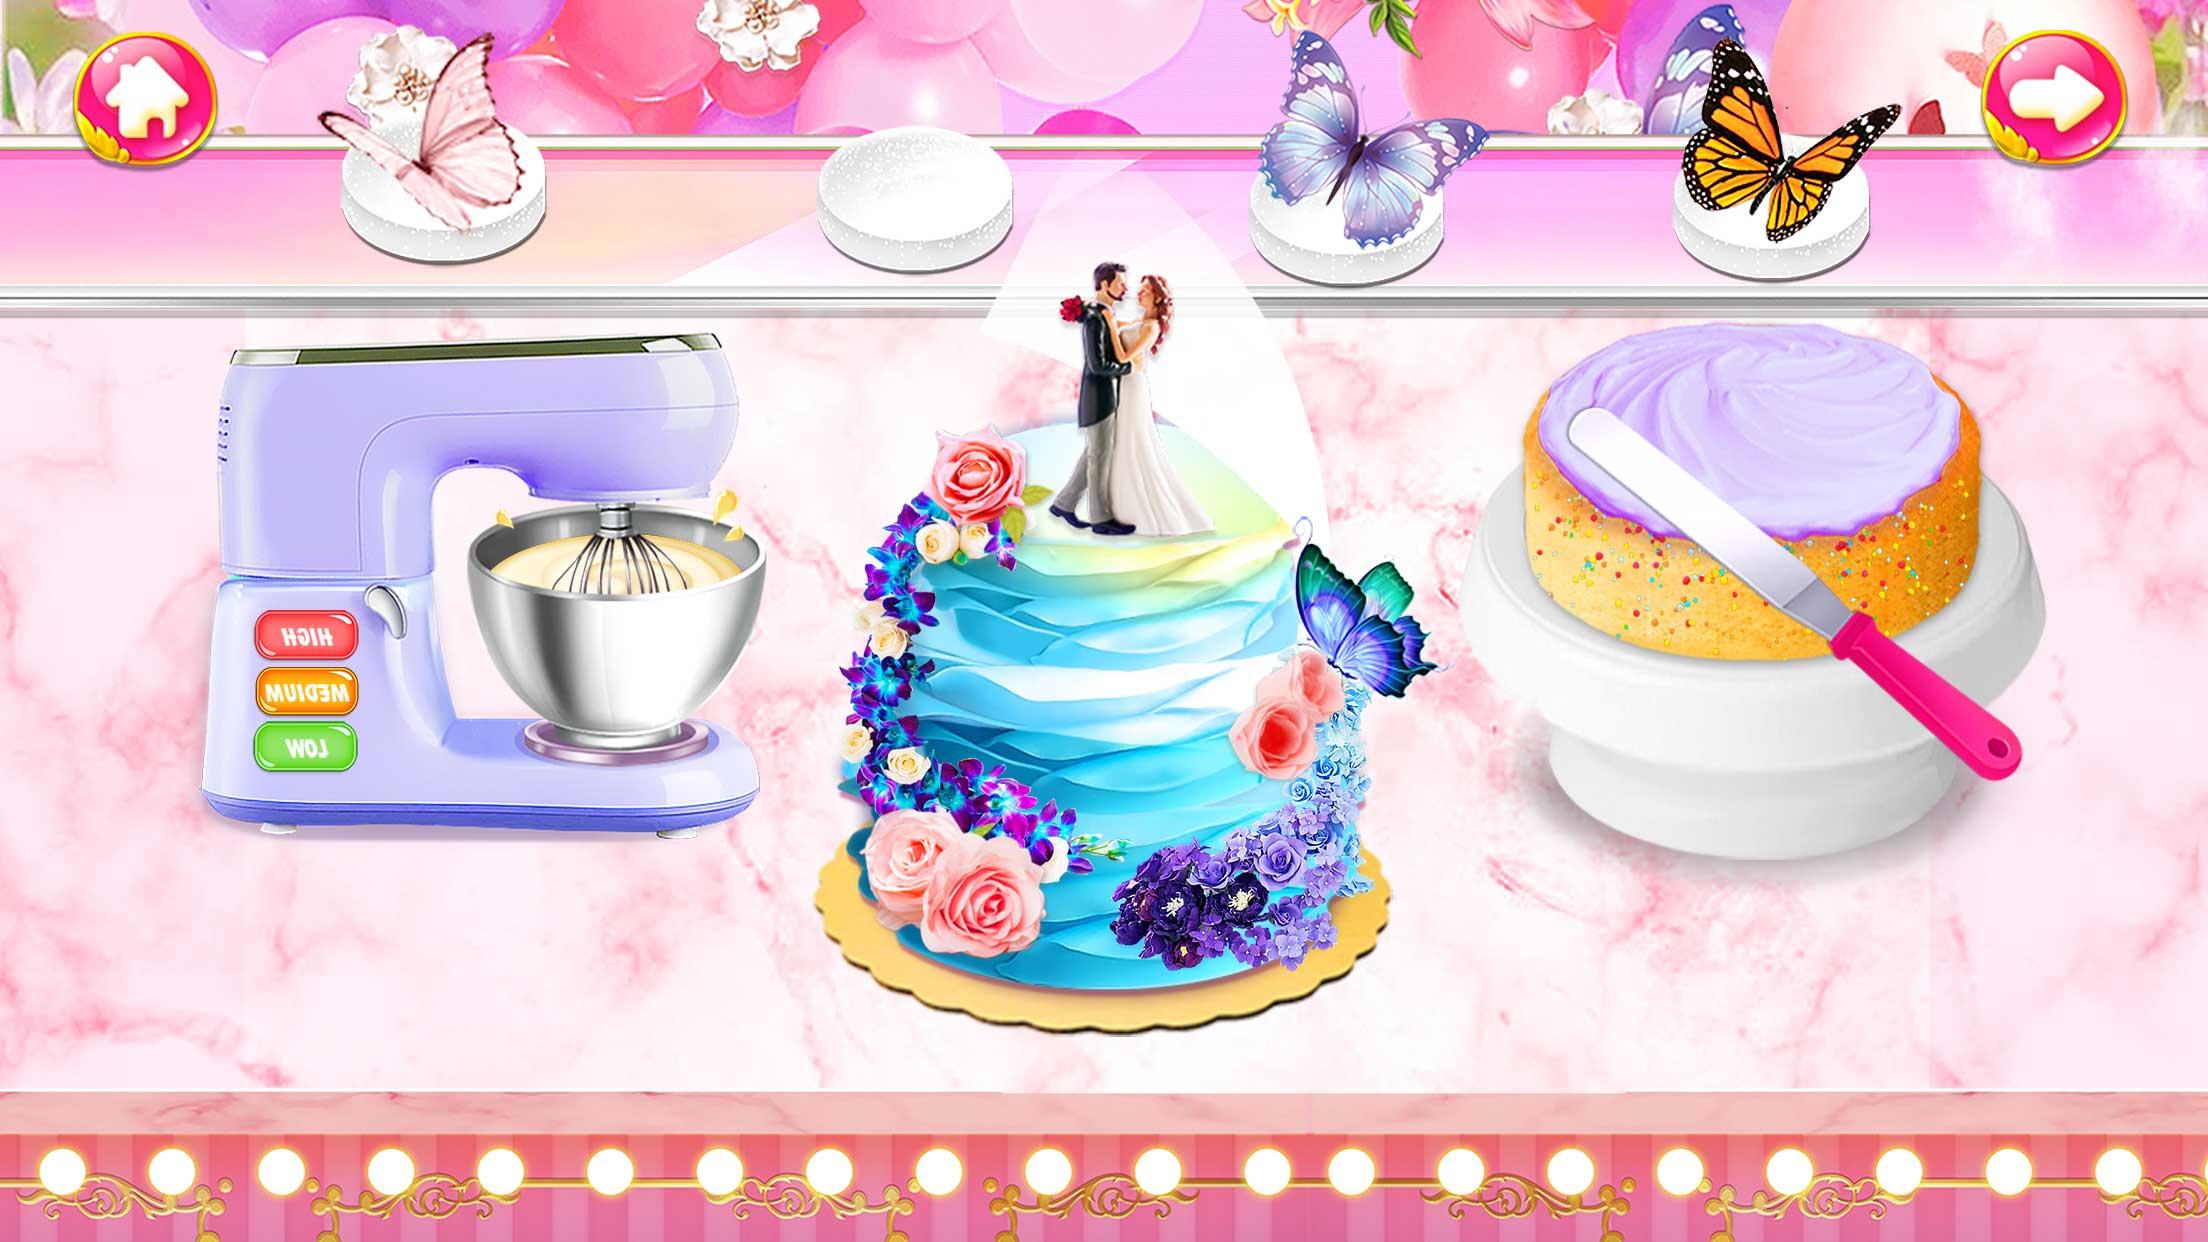 26 Playful Video Game Themed Cake Designs - Design Swan